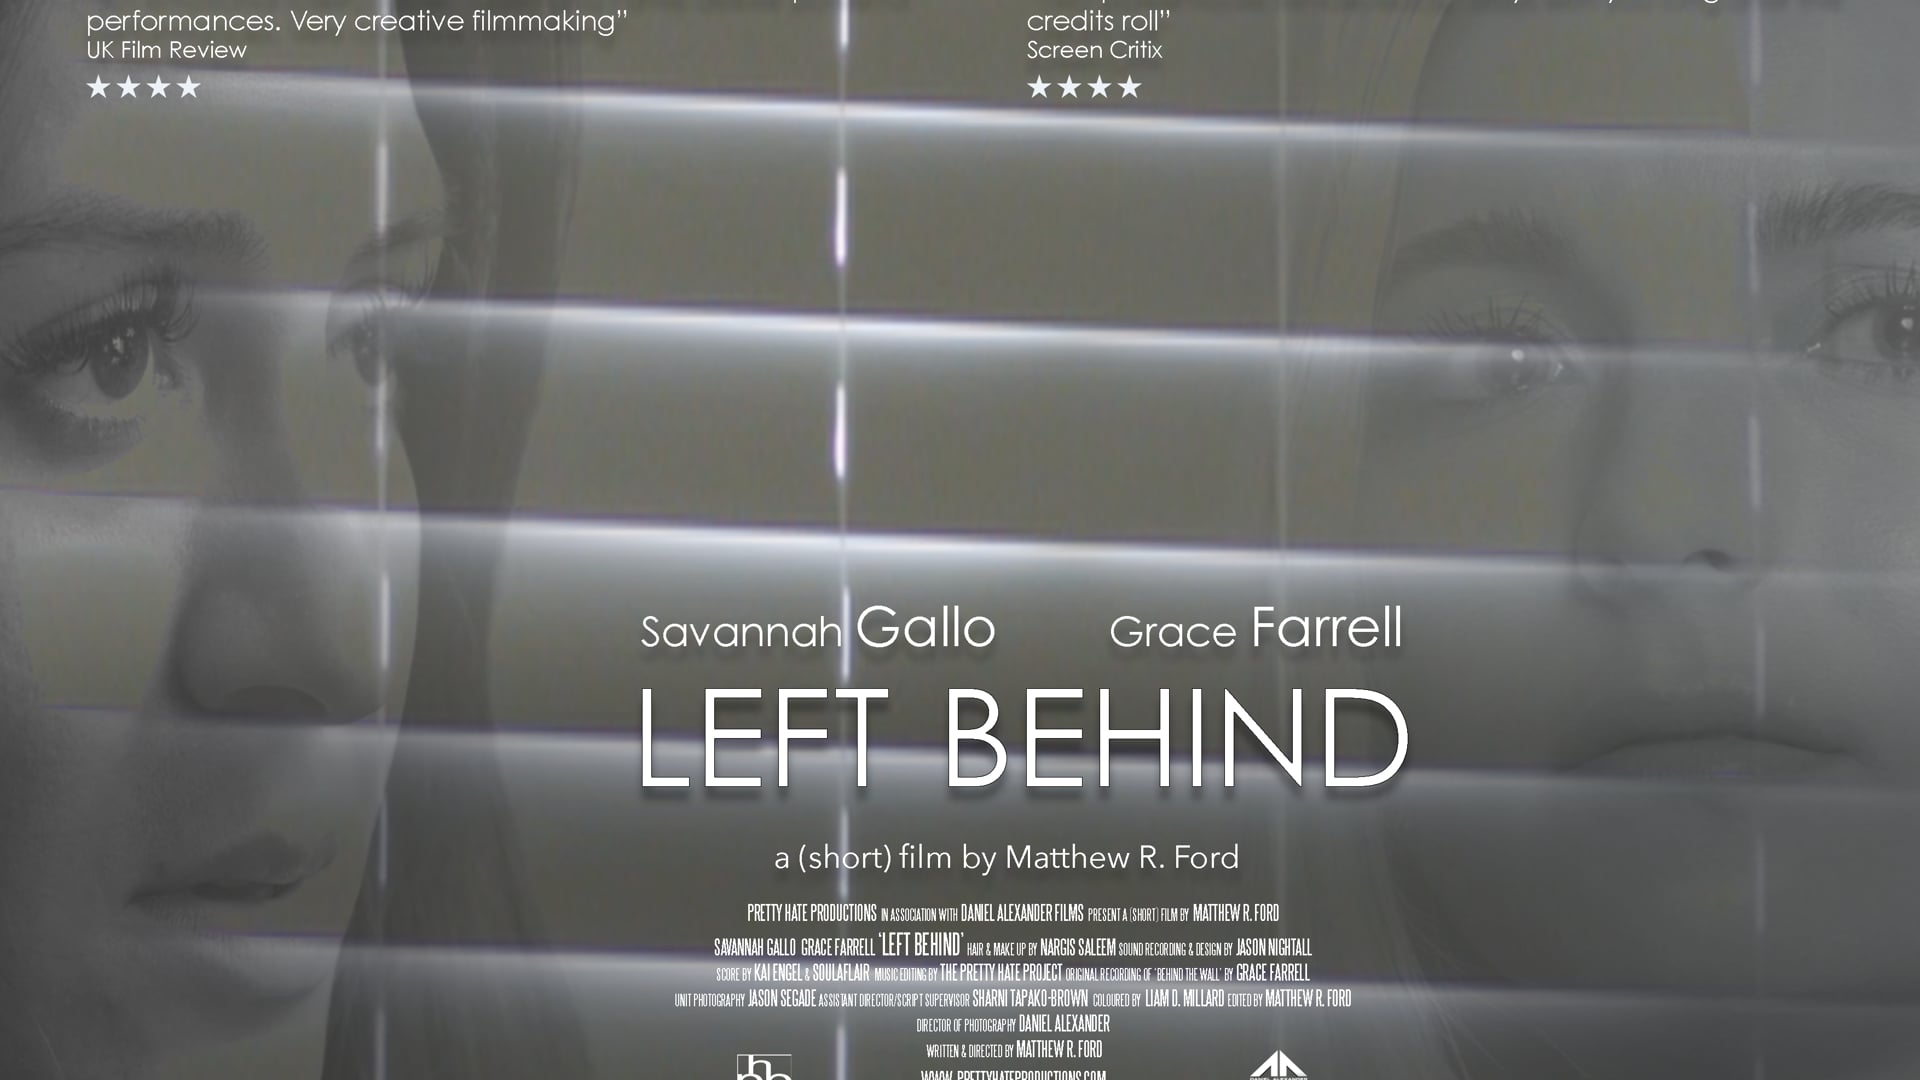 LEFT BEHIND (short film)